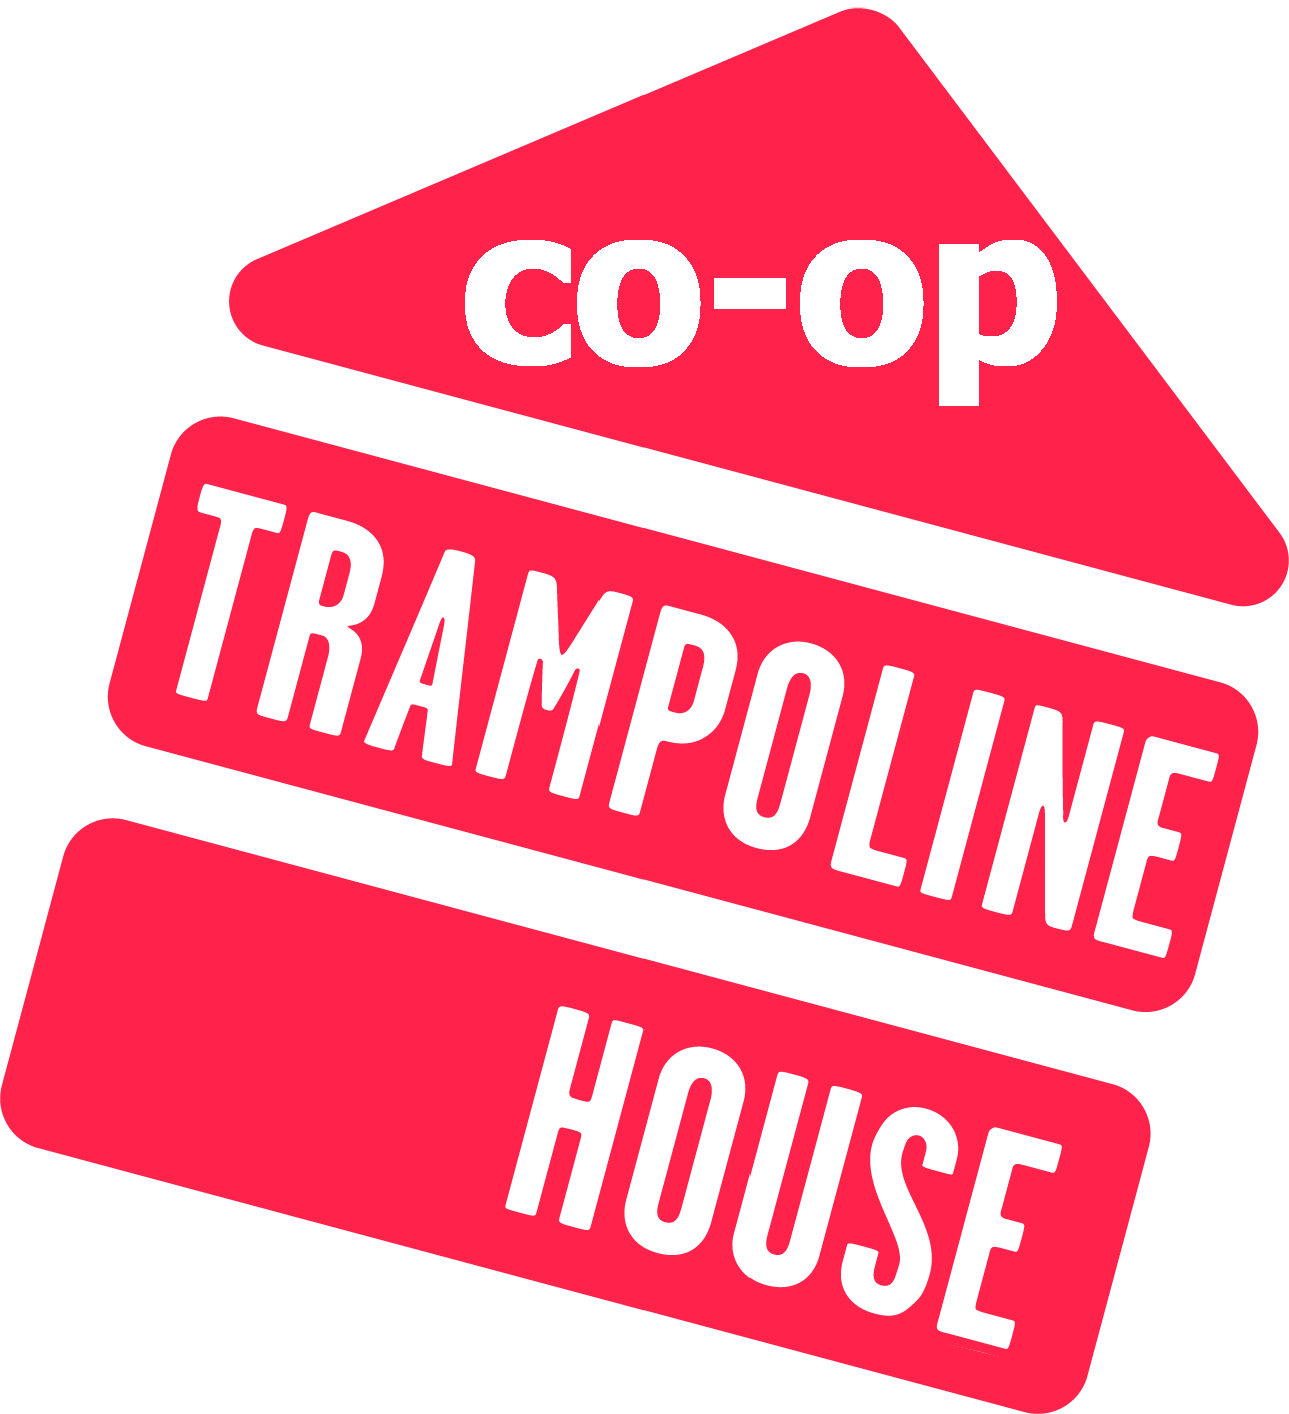 Trampoline House